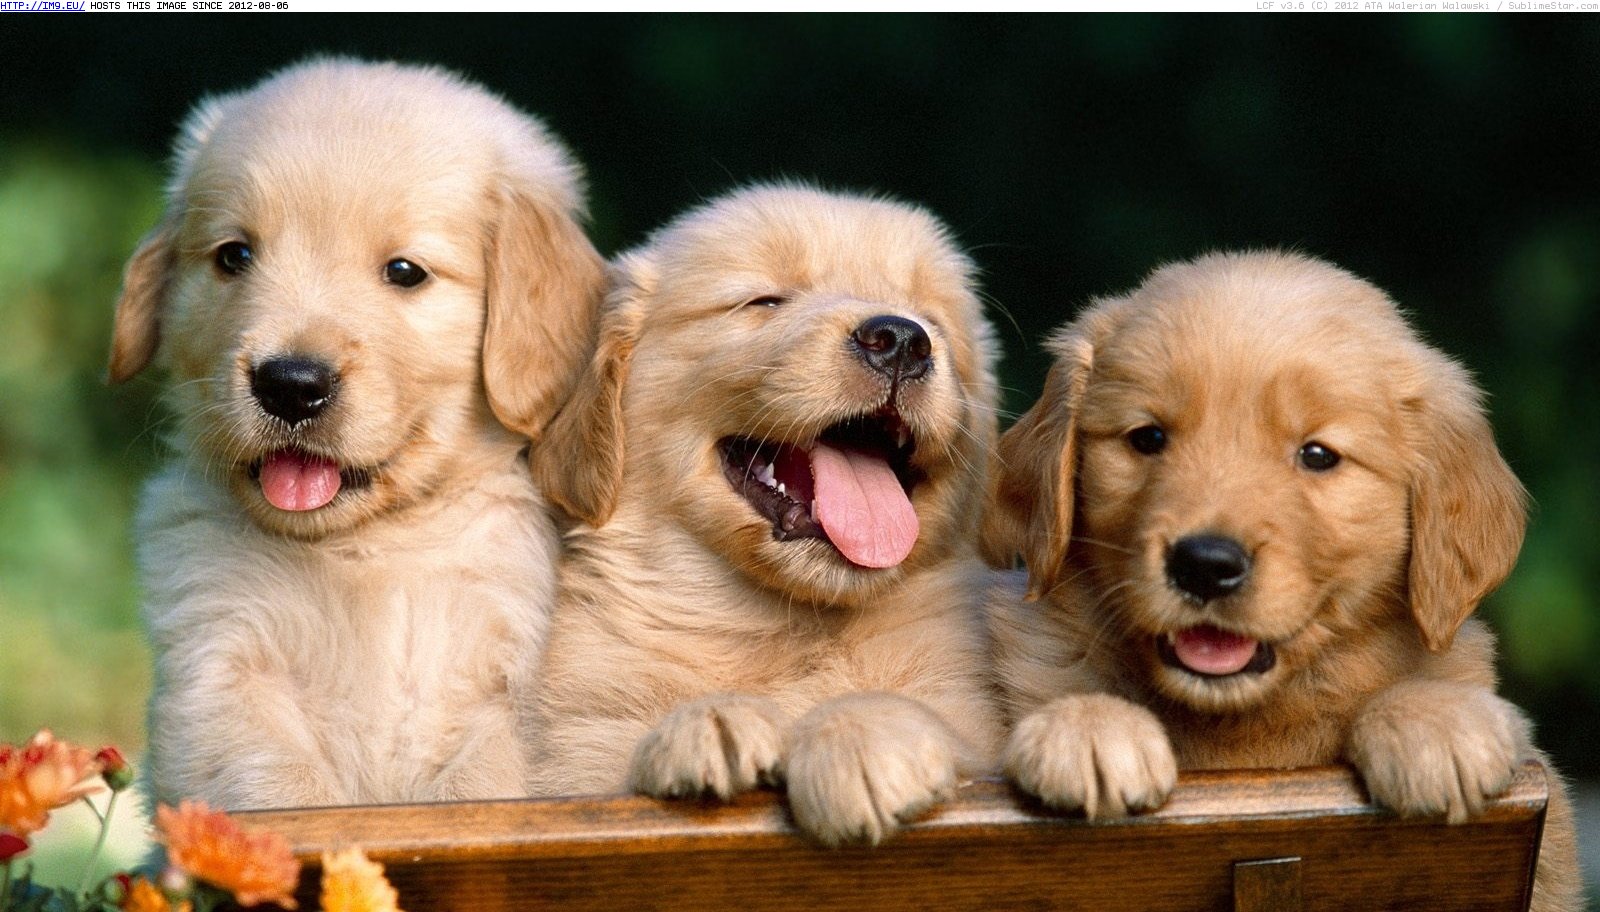 Golden Retriever Puppies Wallpaper Pictures Photos Image